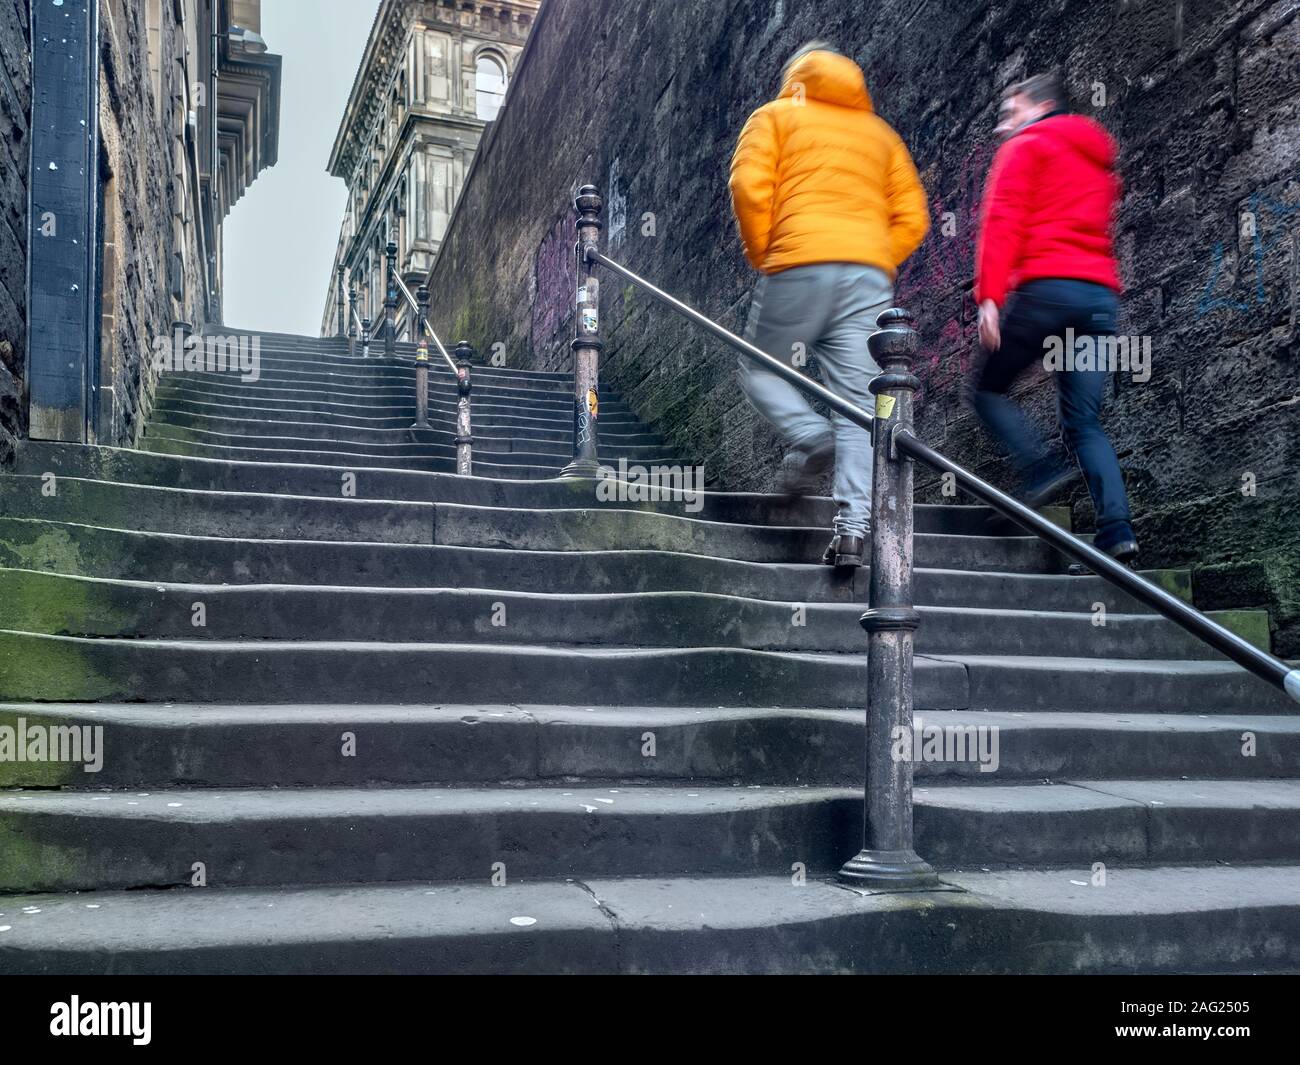 Flight of steps connecting Guthrie Street to Chambers Street, Edinburgh, Scotland, UK. Stock Photo